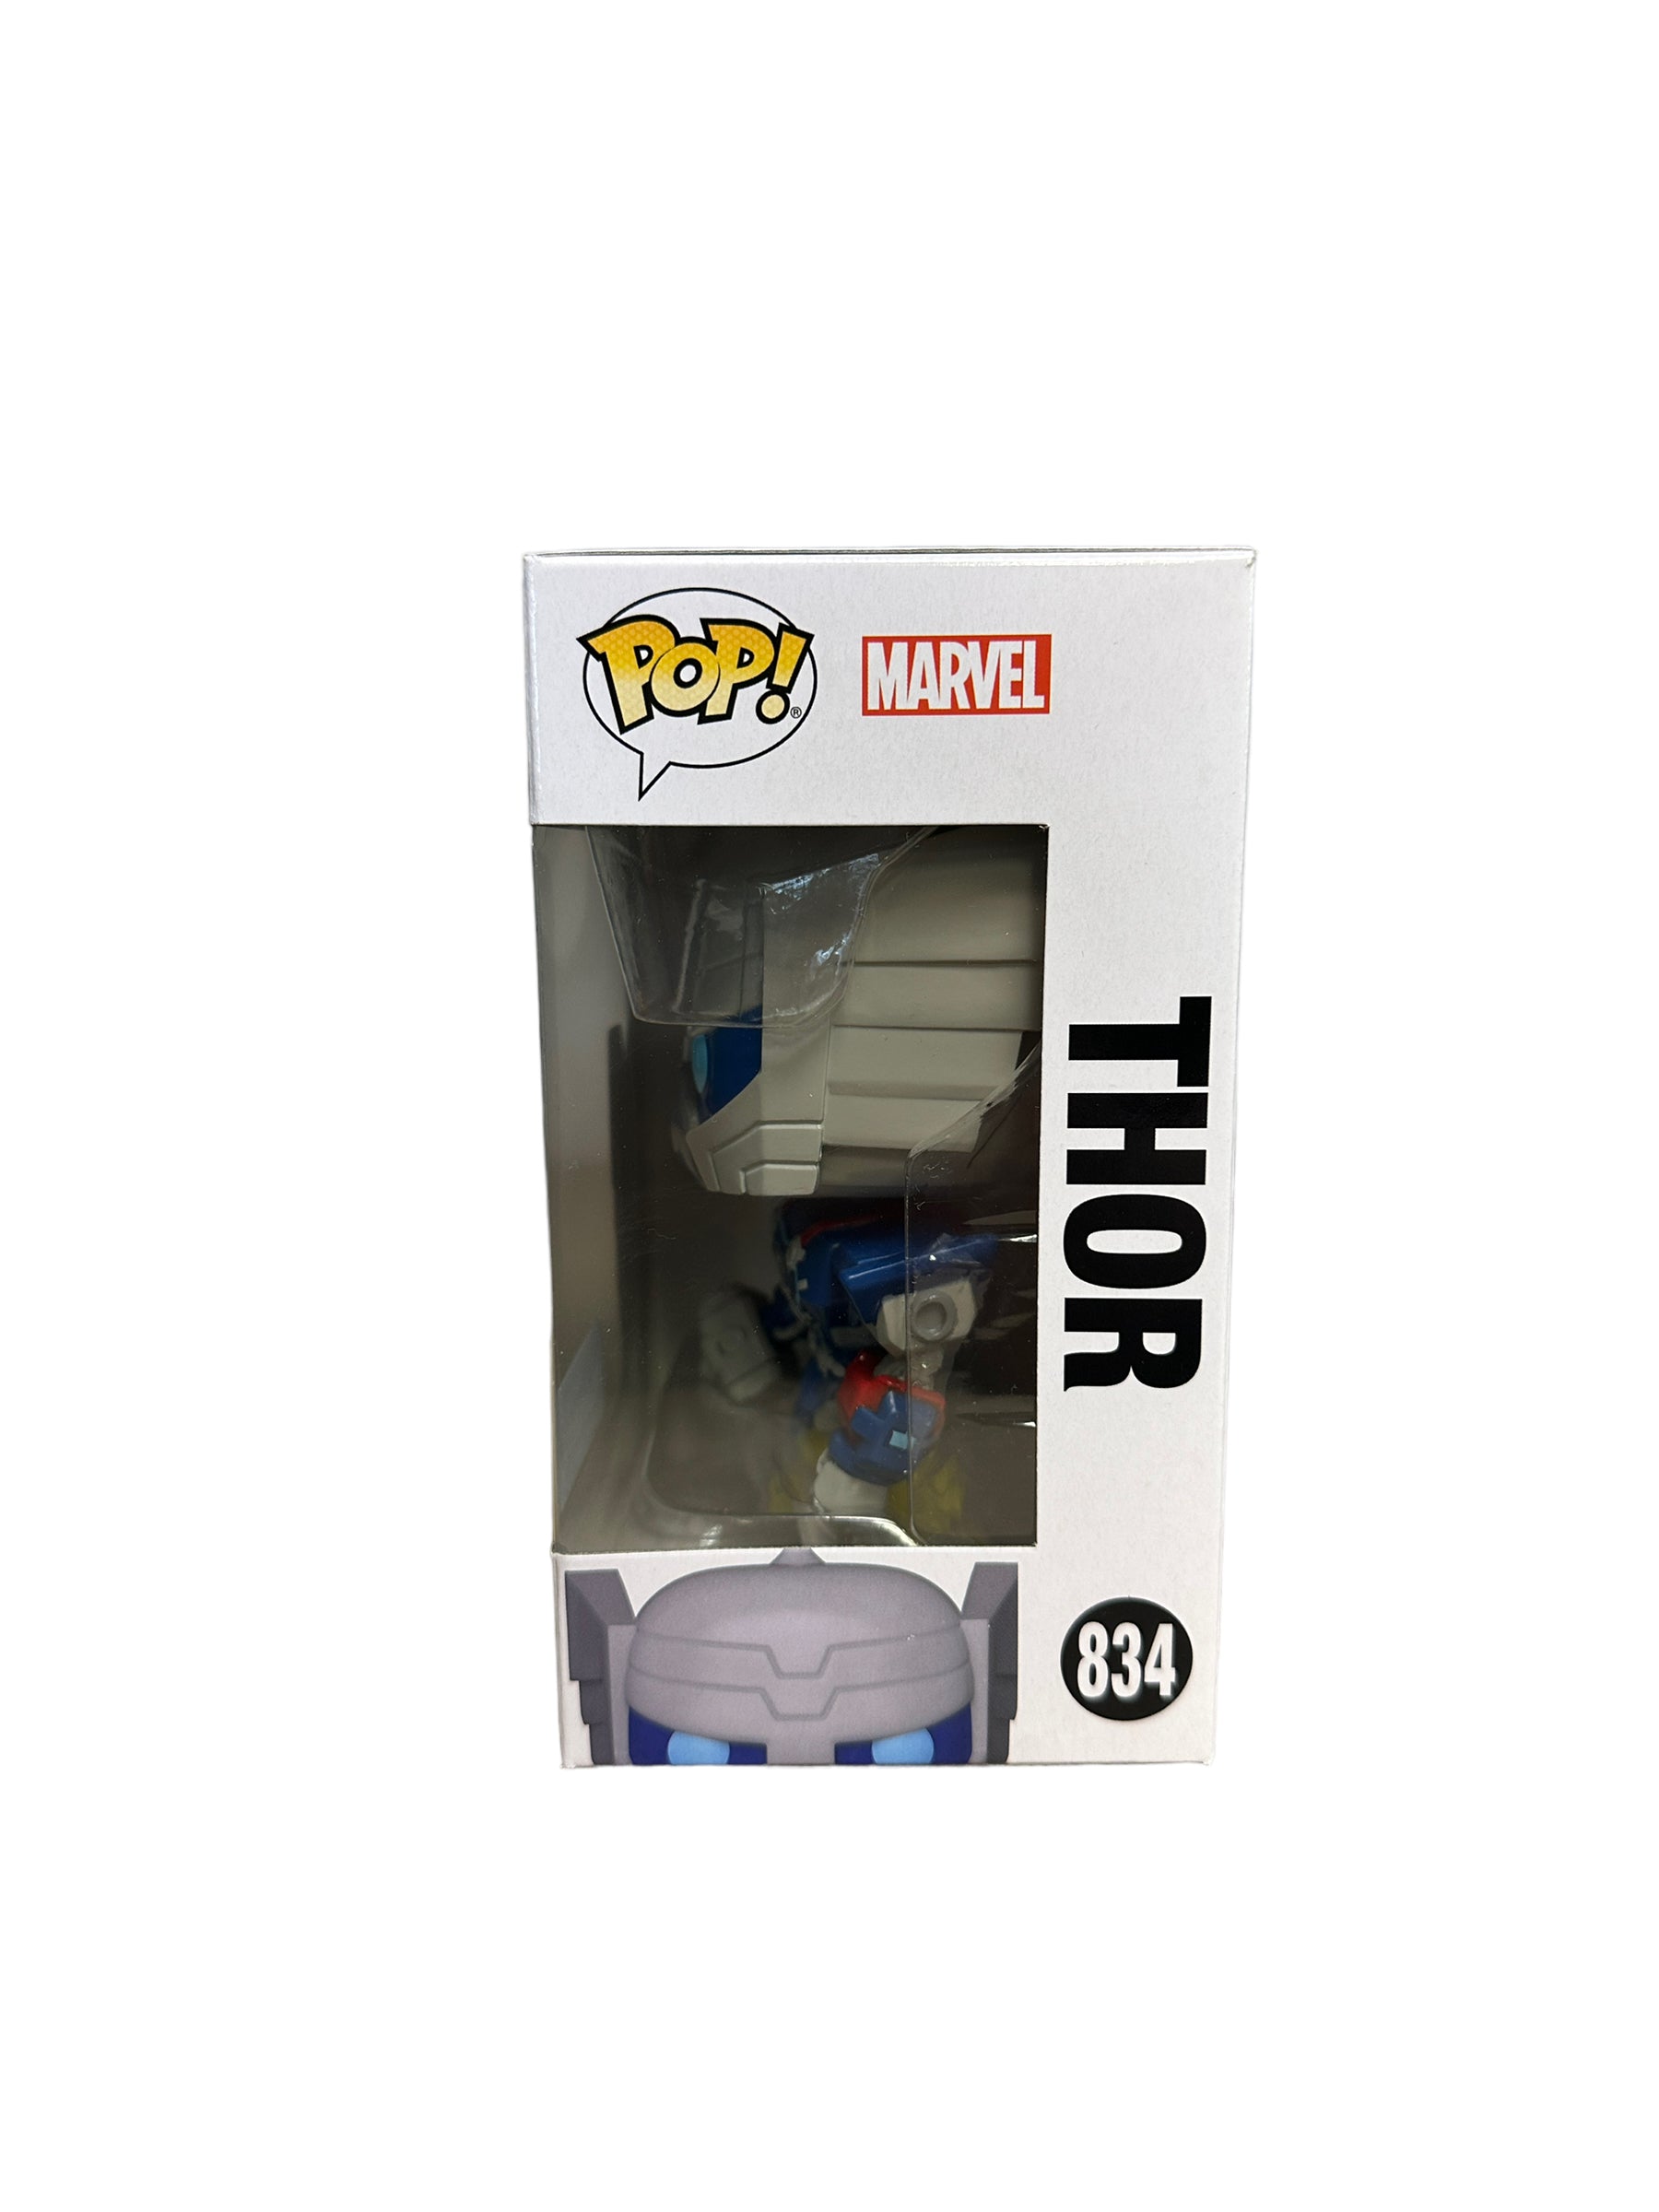 Thor #834 Funko Pop! - Avengers Mech Strike - Walmart Exclusive - Condition 8.5/10